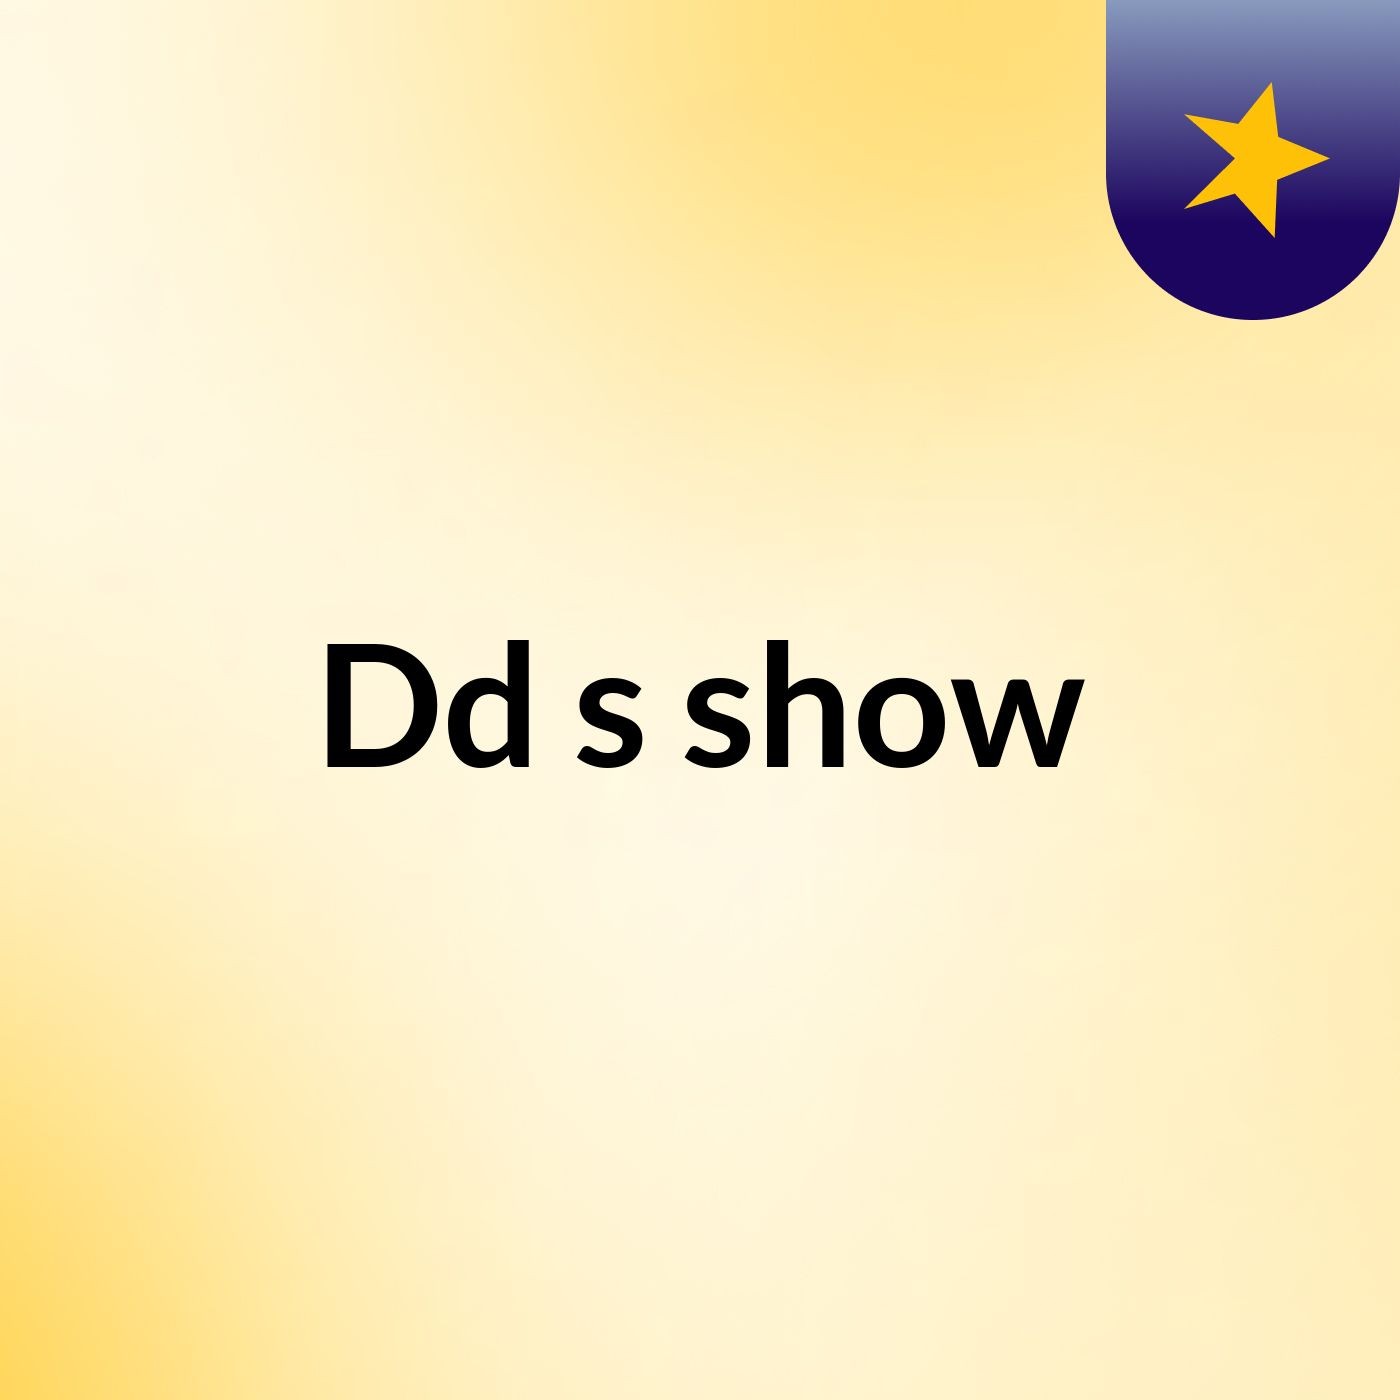 Dd's show